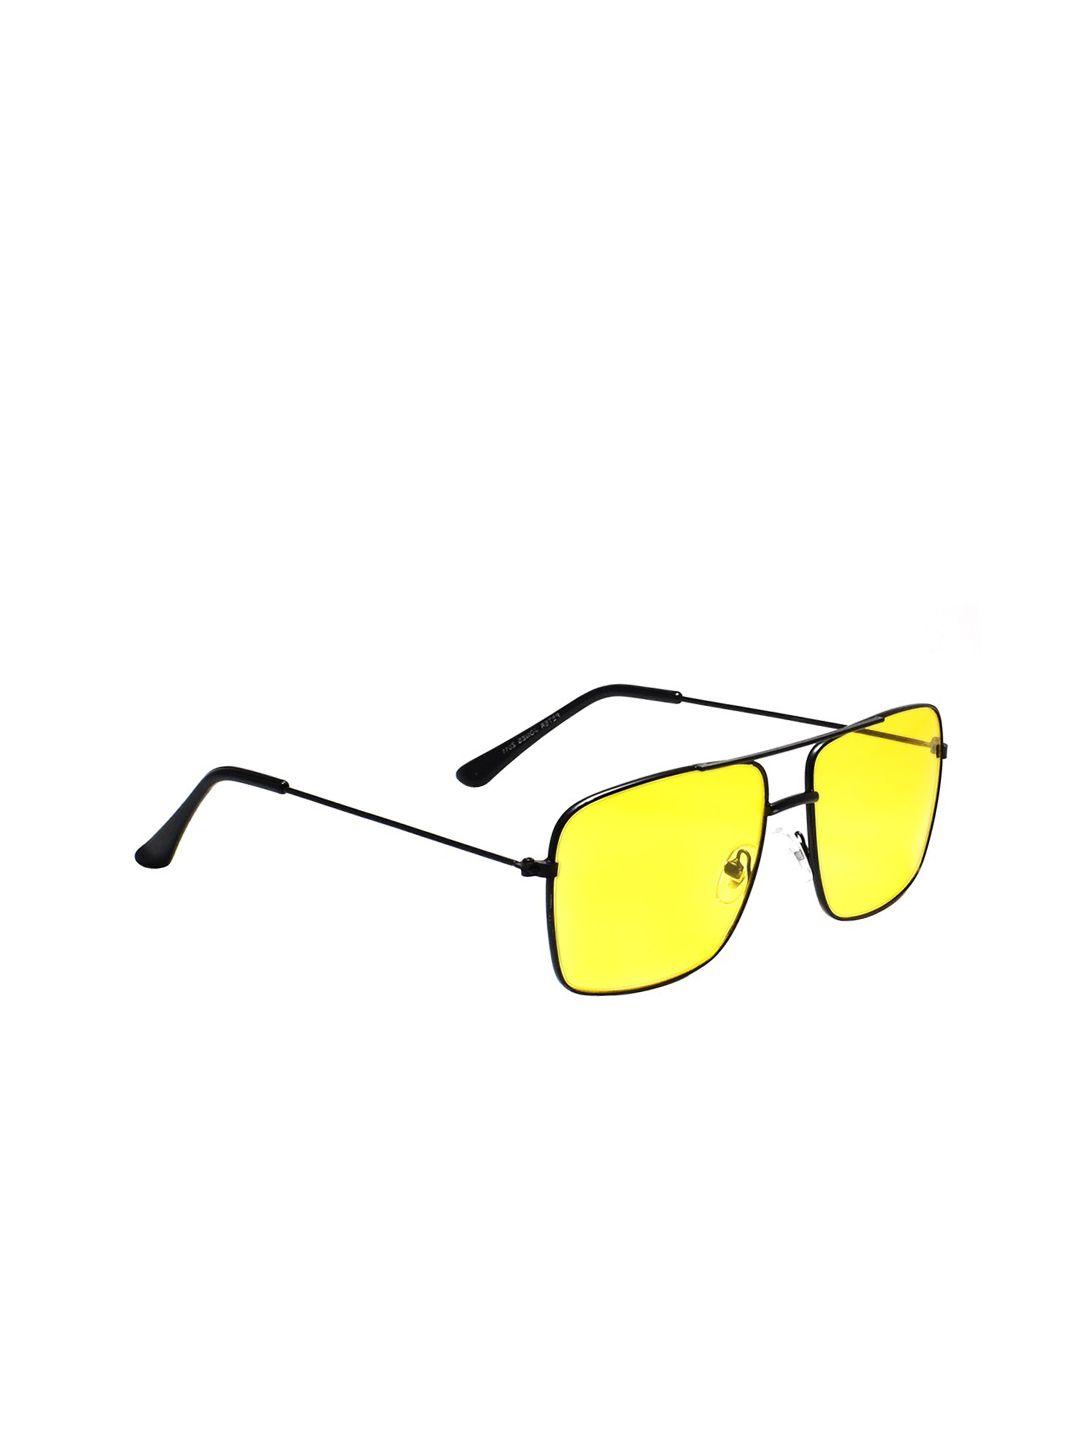 peter jones eyewear women yellow lens & black square sunglasses st001yb